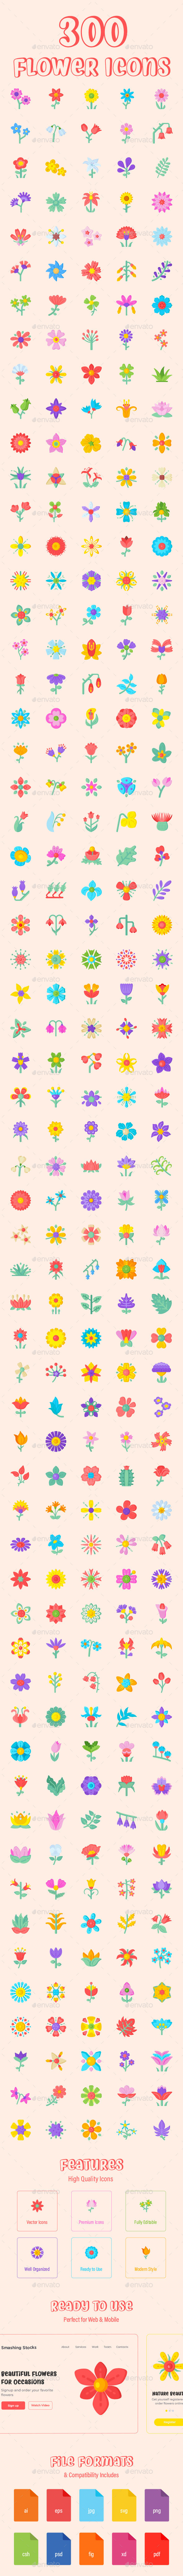 300 Flat Flower Icons